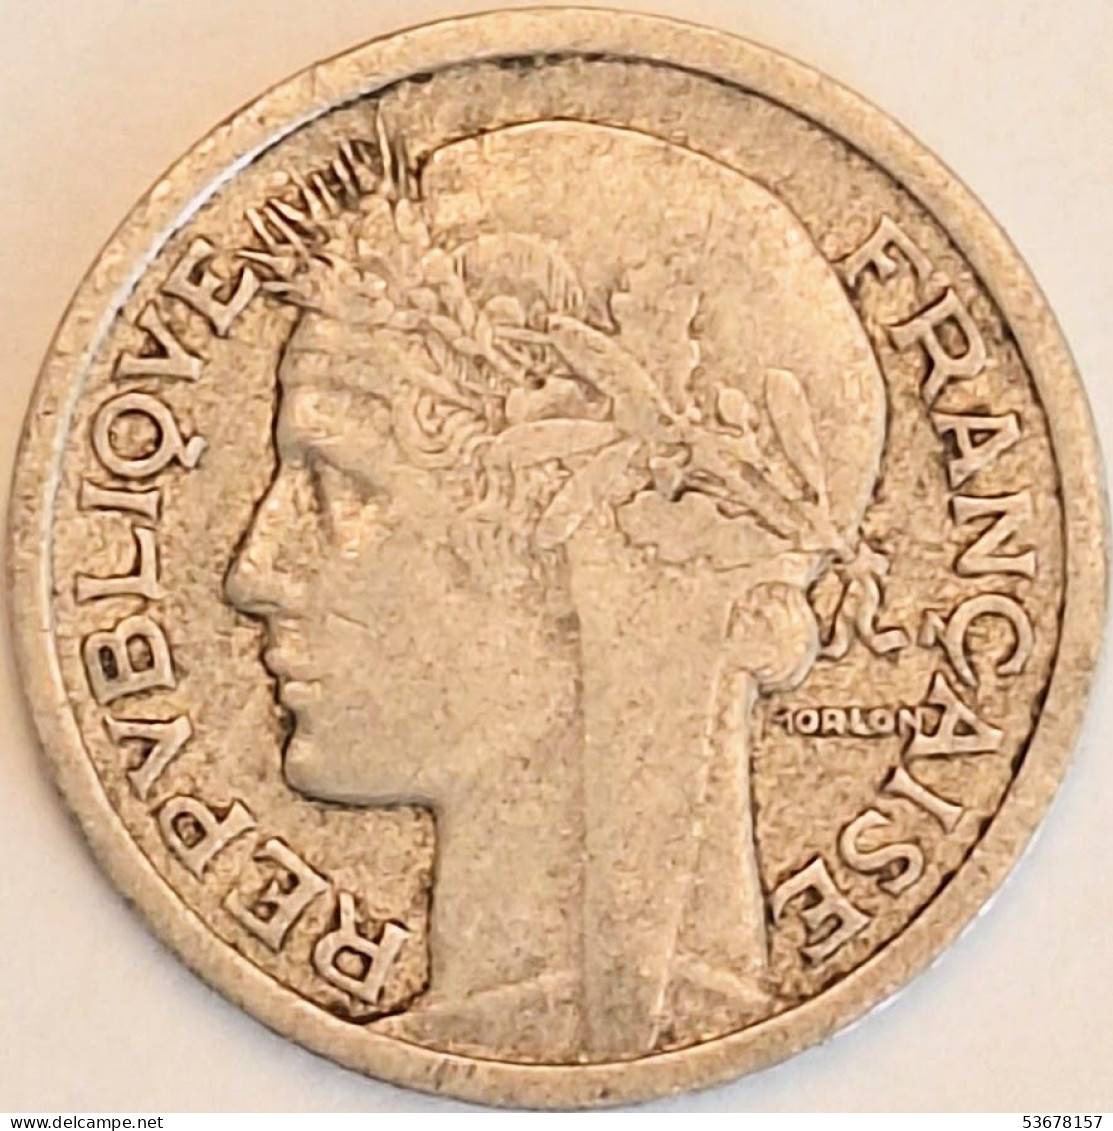 France - Franc 1950, KM# 885a.1 (#4086) - 1 Franc